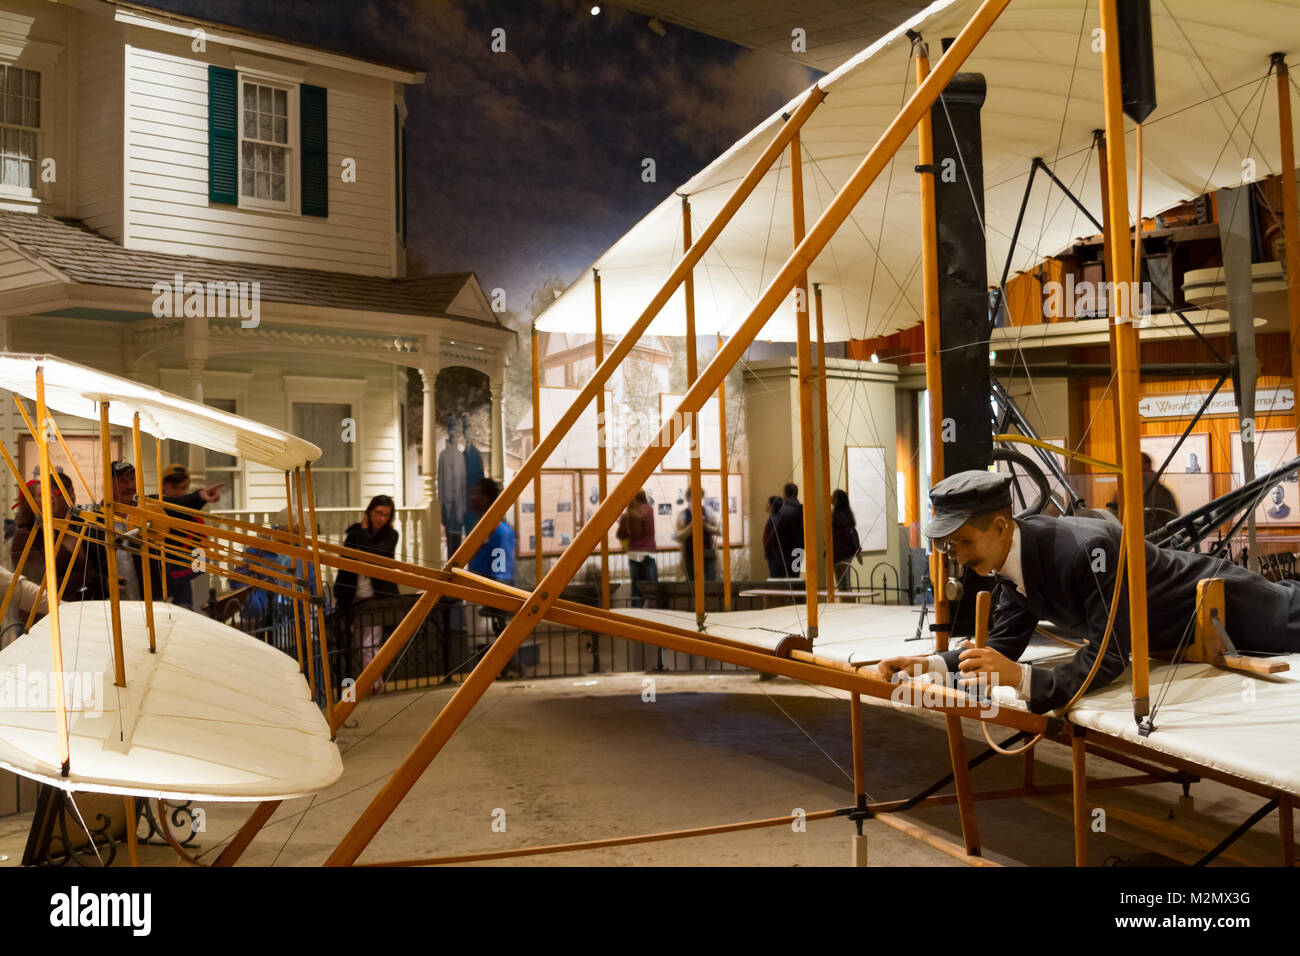 WASHINGTON D.C., États-Unis - 11 MAI 2016 : Frères Wright 1903 powered by Flyer à National Air and Space Museum de Washington, D.C., Smithsonian Institution Banque D'Images